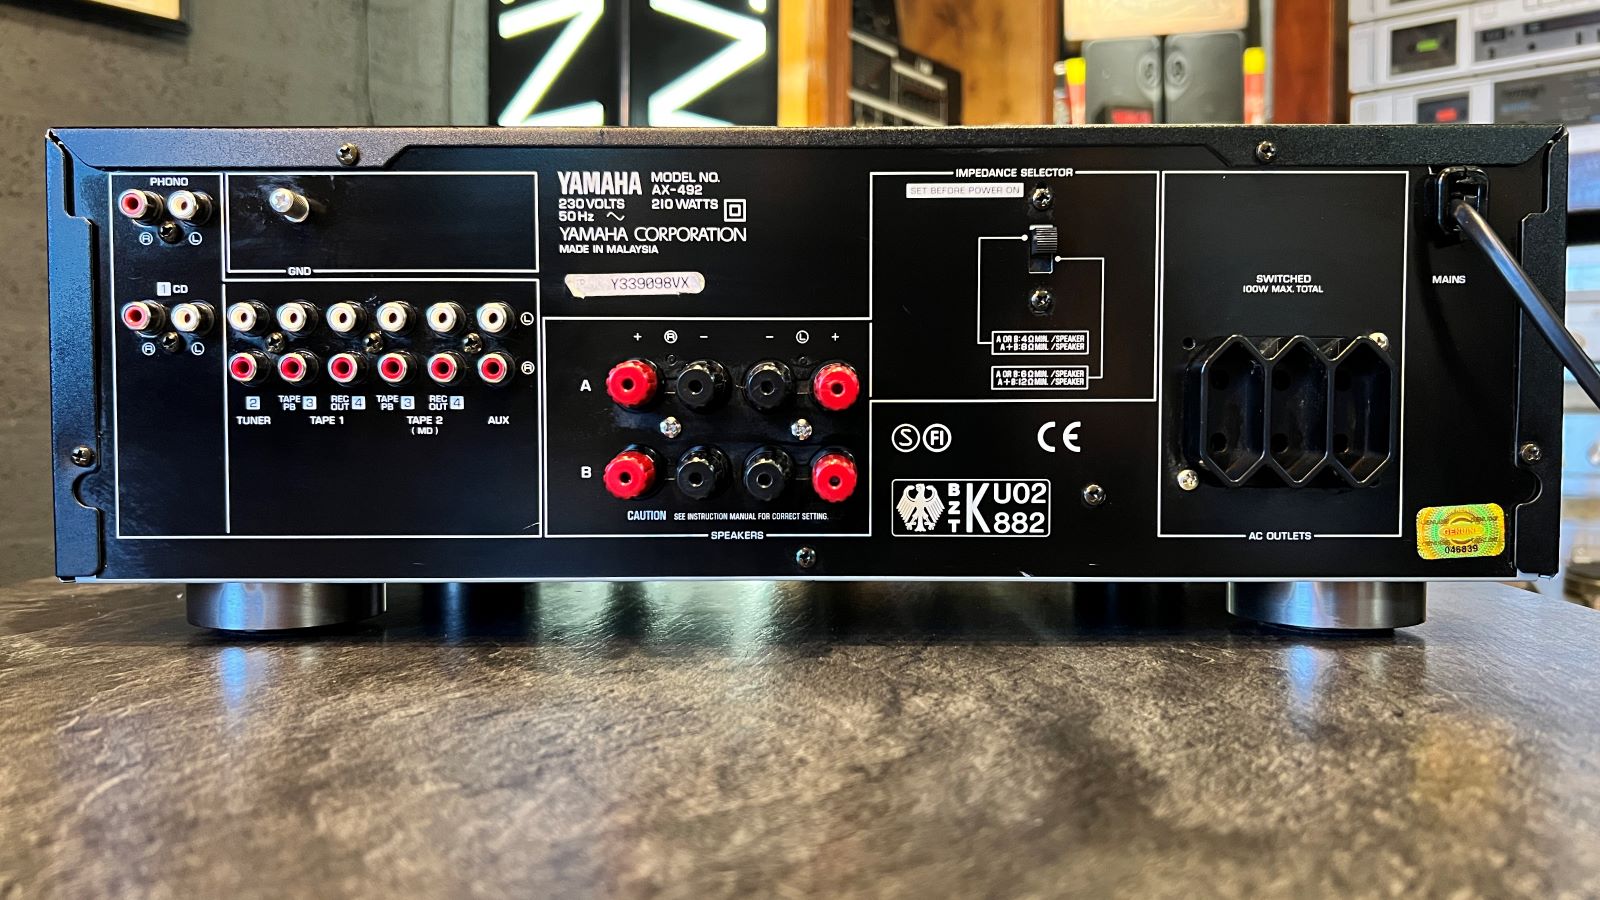 Yamaha AX-492 Natural Sound Stereo versterker